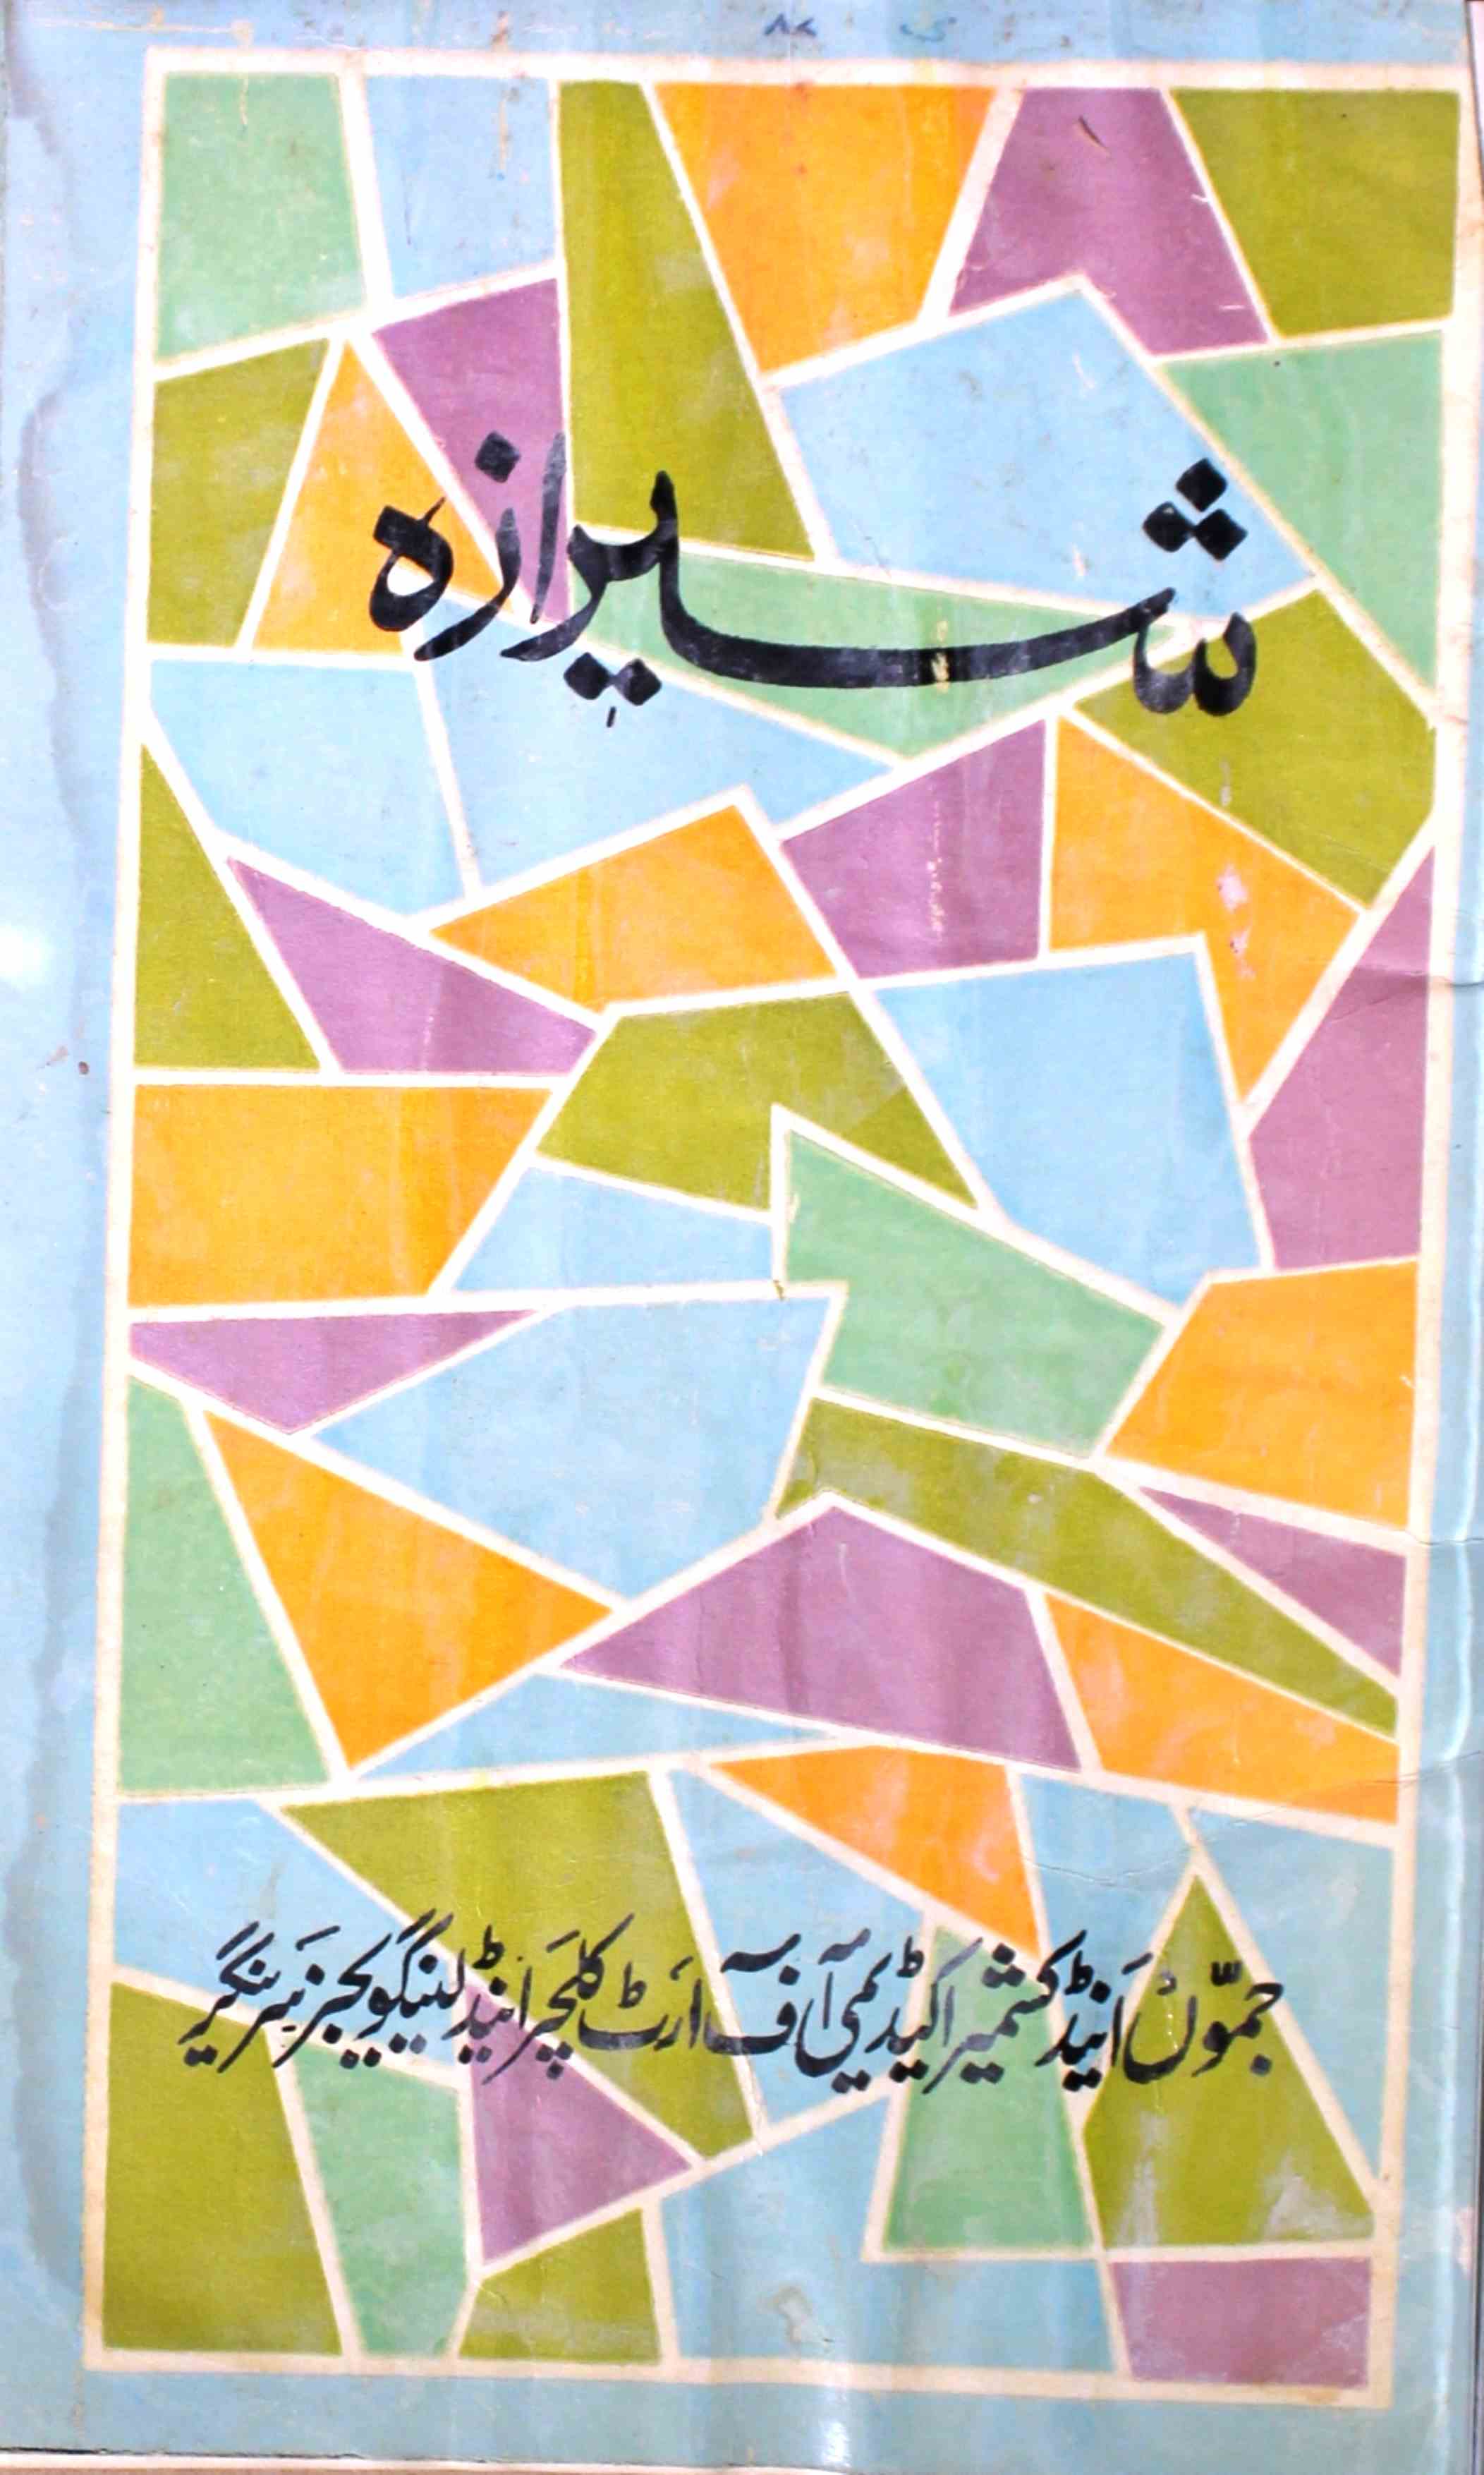 sheeraza-shumara-number-005-mohammad-yusuf-tayeng-magazines-4